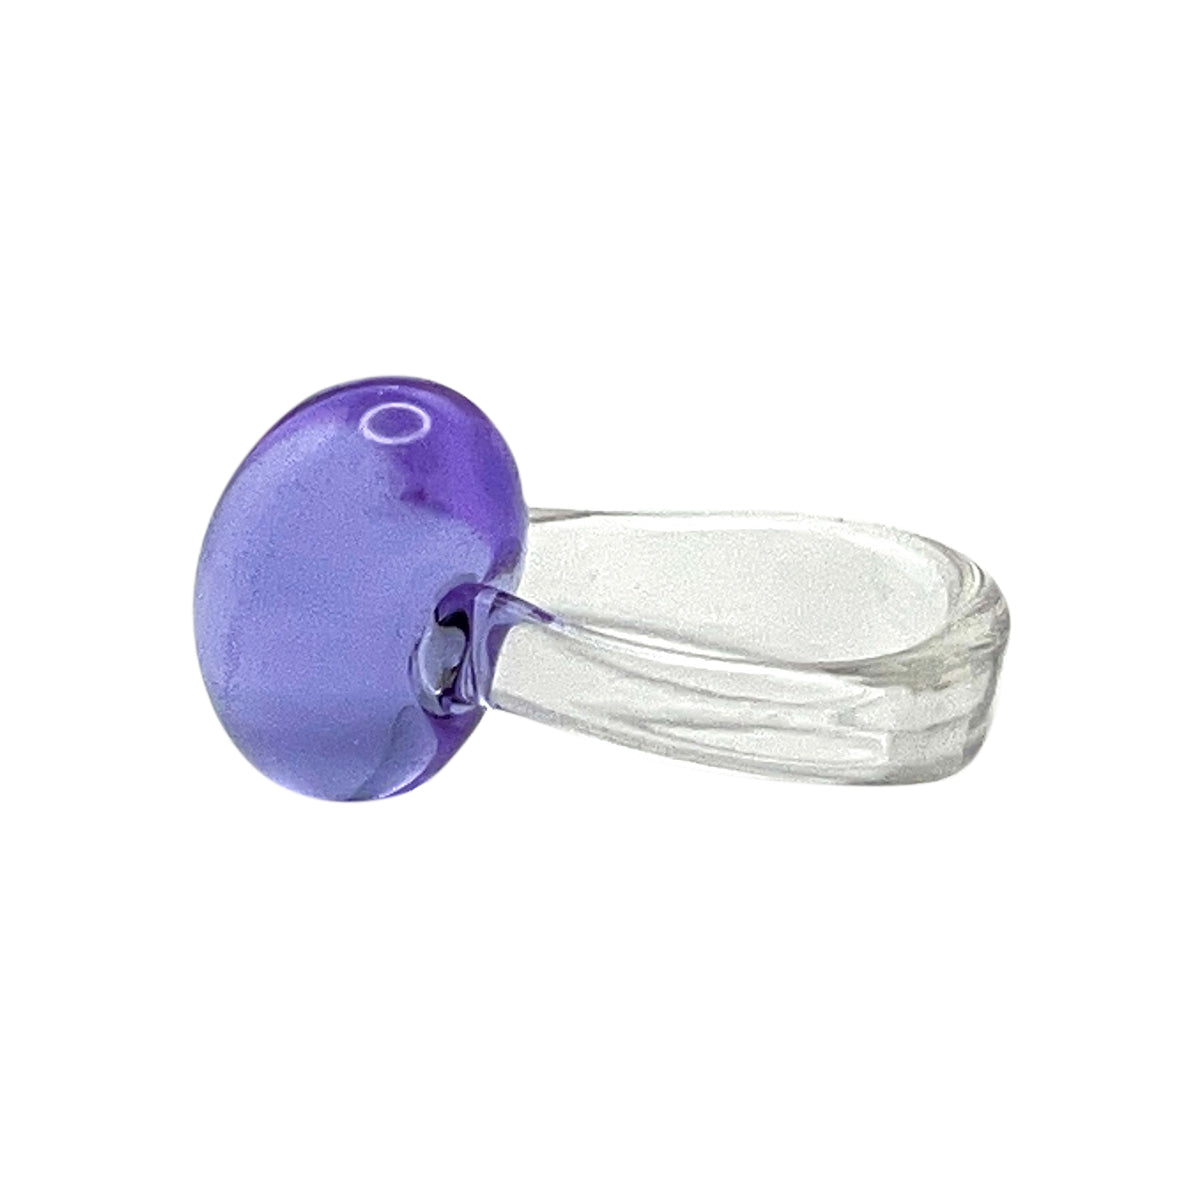 Lavender Jelly Bean Ring